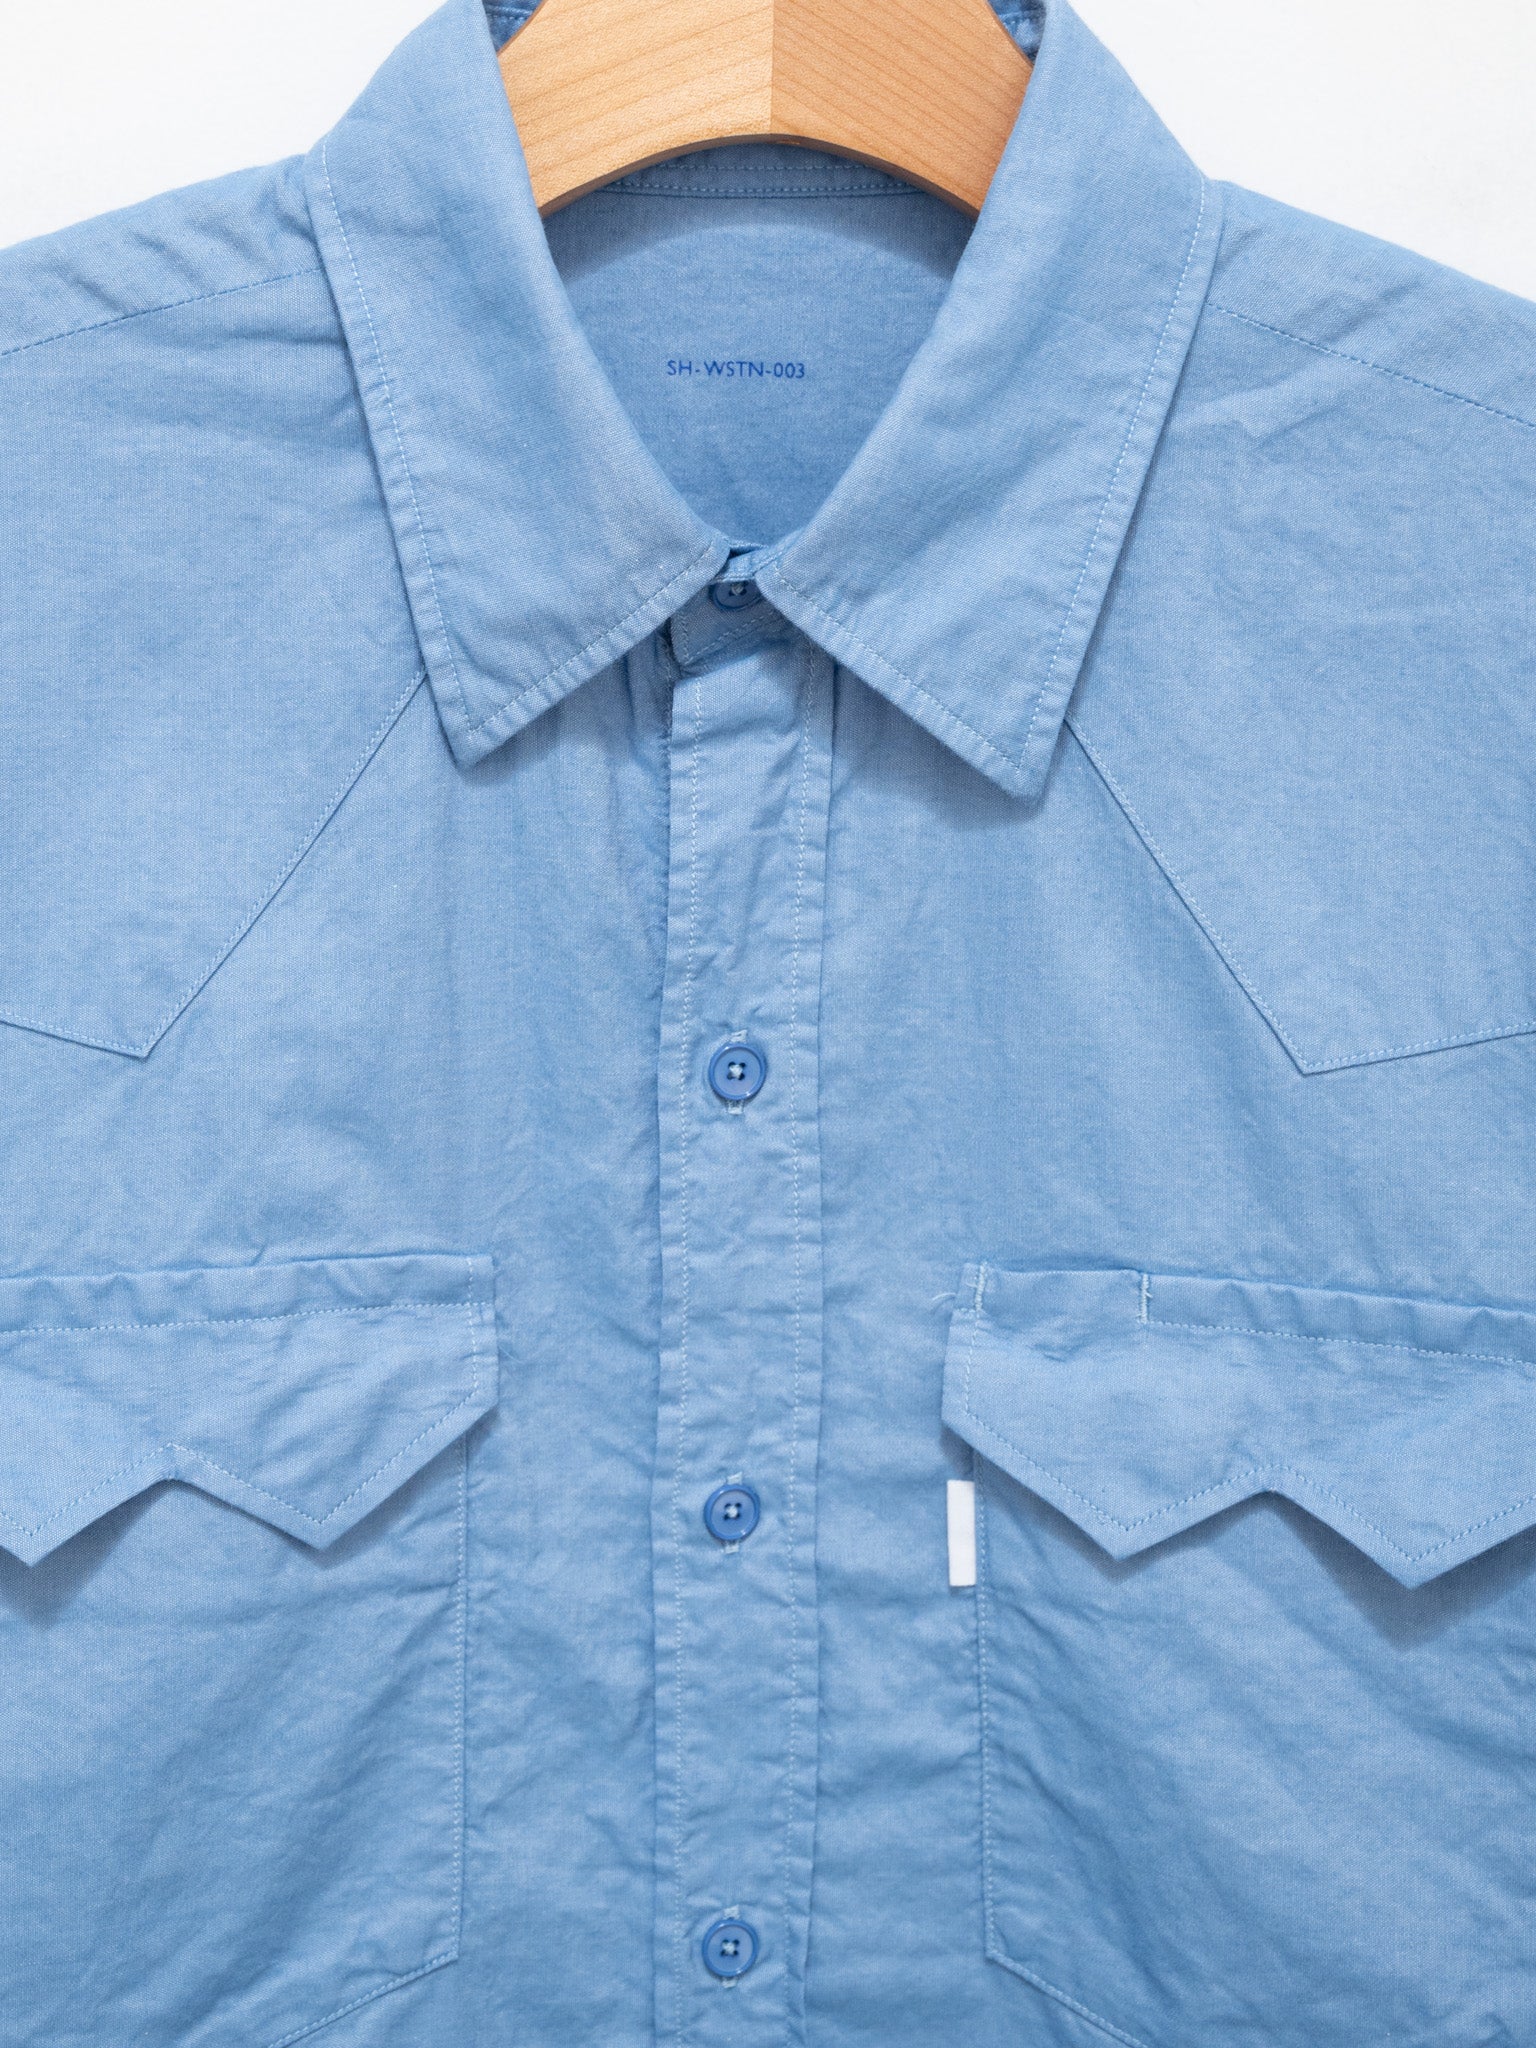 Namu Shop - S H Western Shirt - Blue Chambray